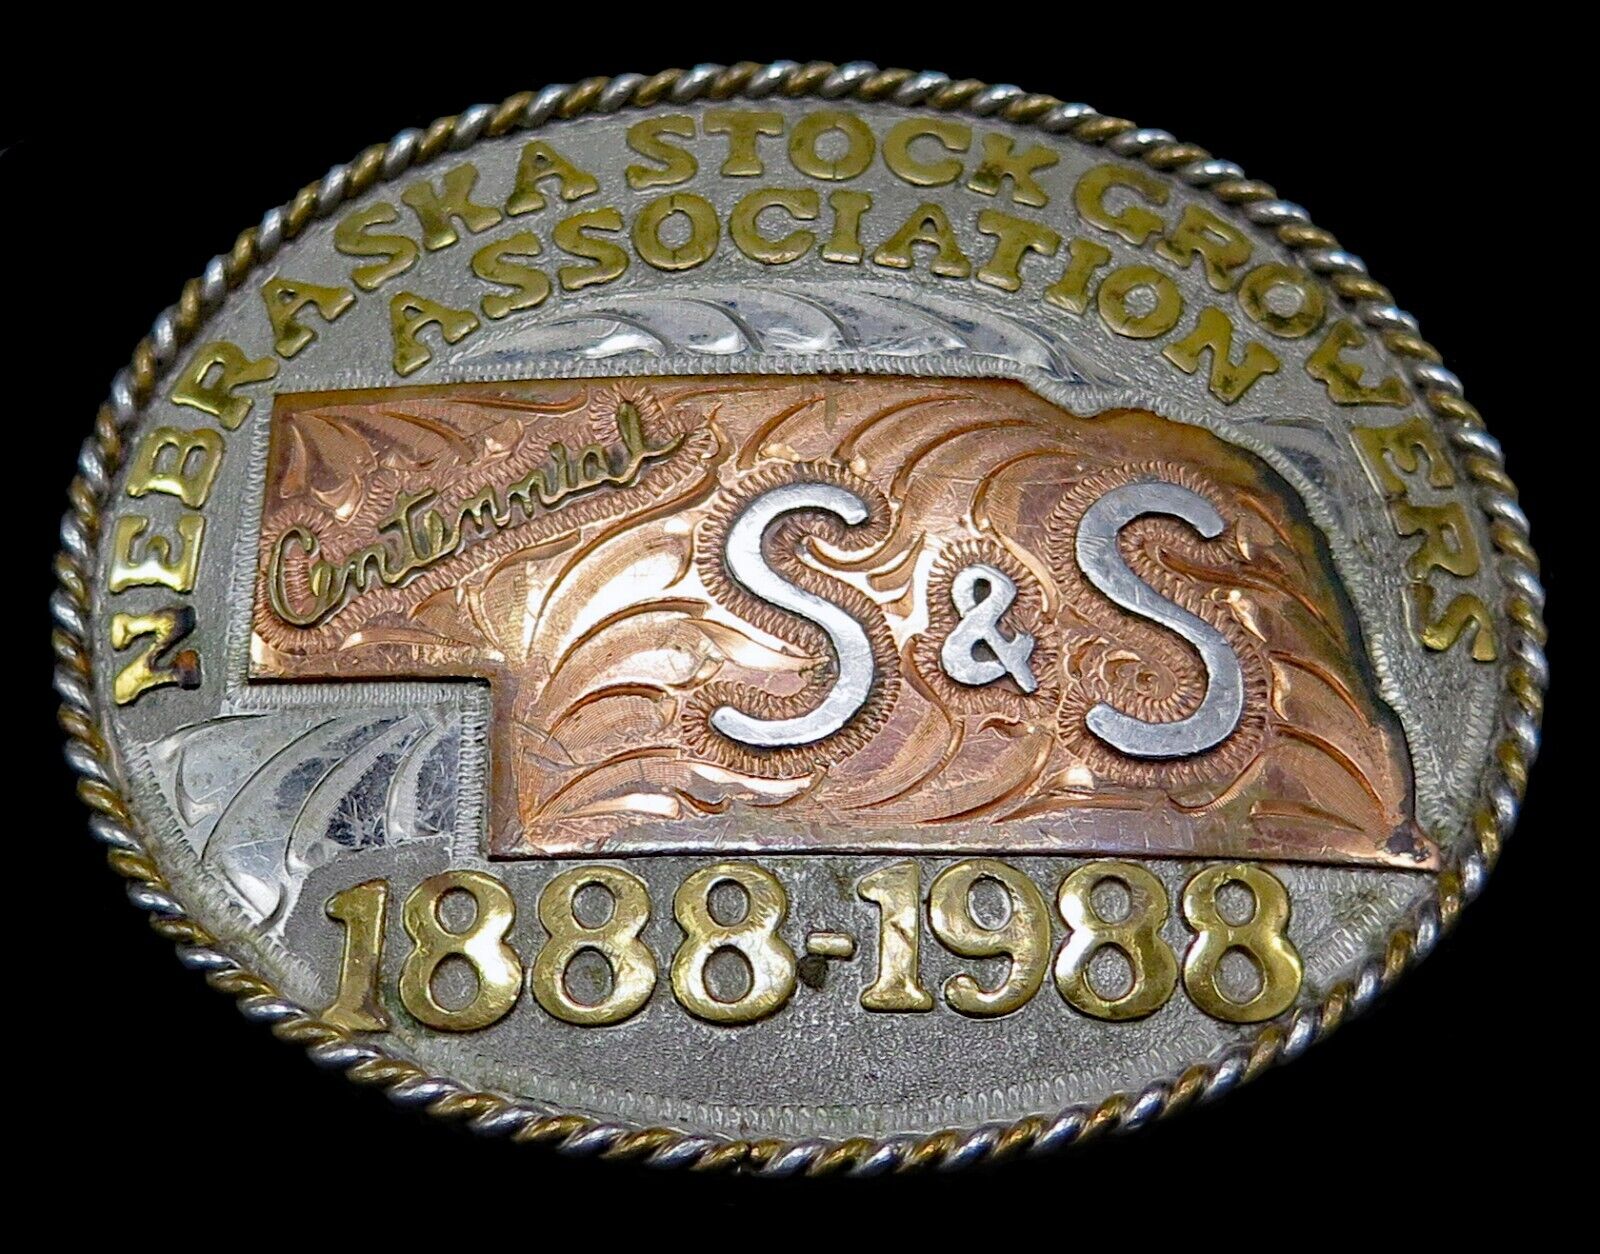 Nebraska Stock Growers Association Frontier Cattlemen Vintage Belt Buckle